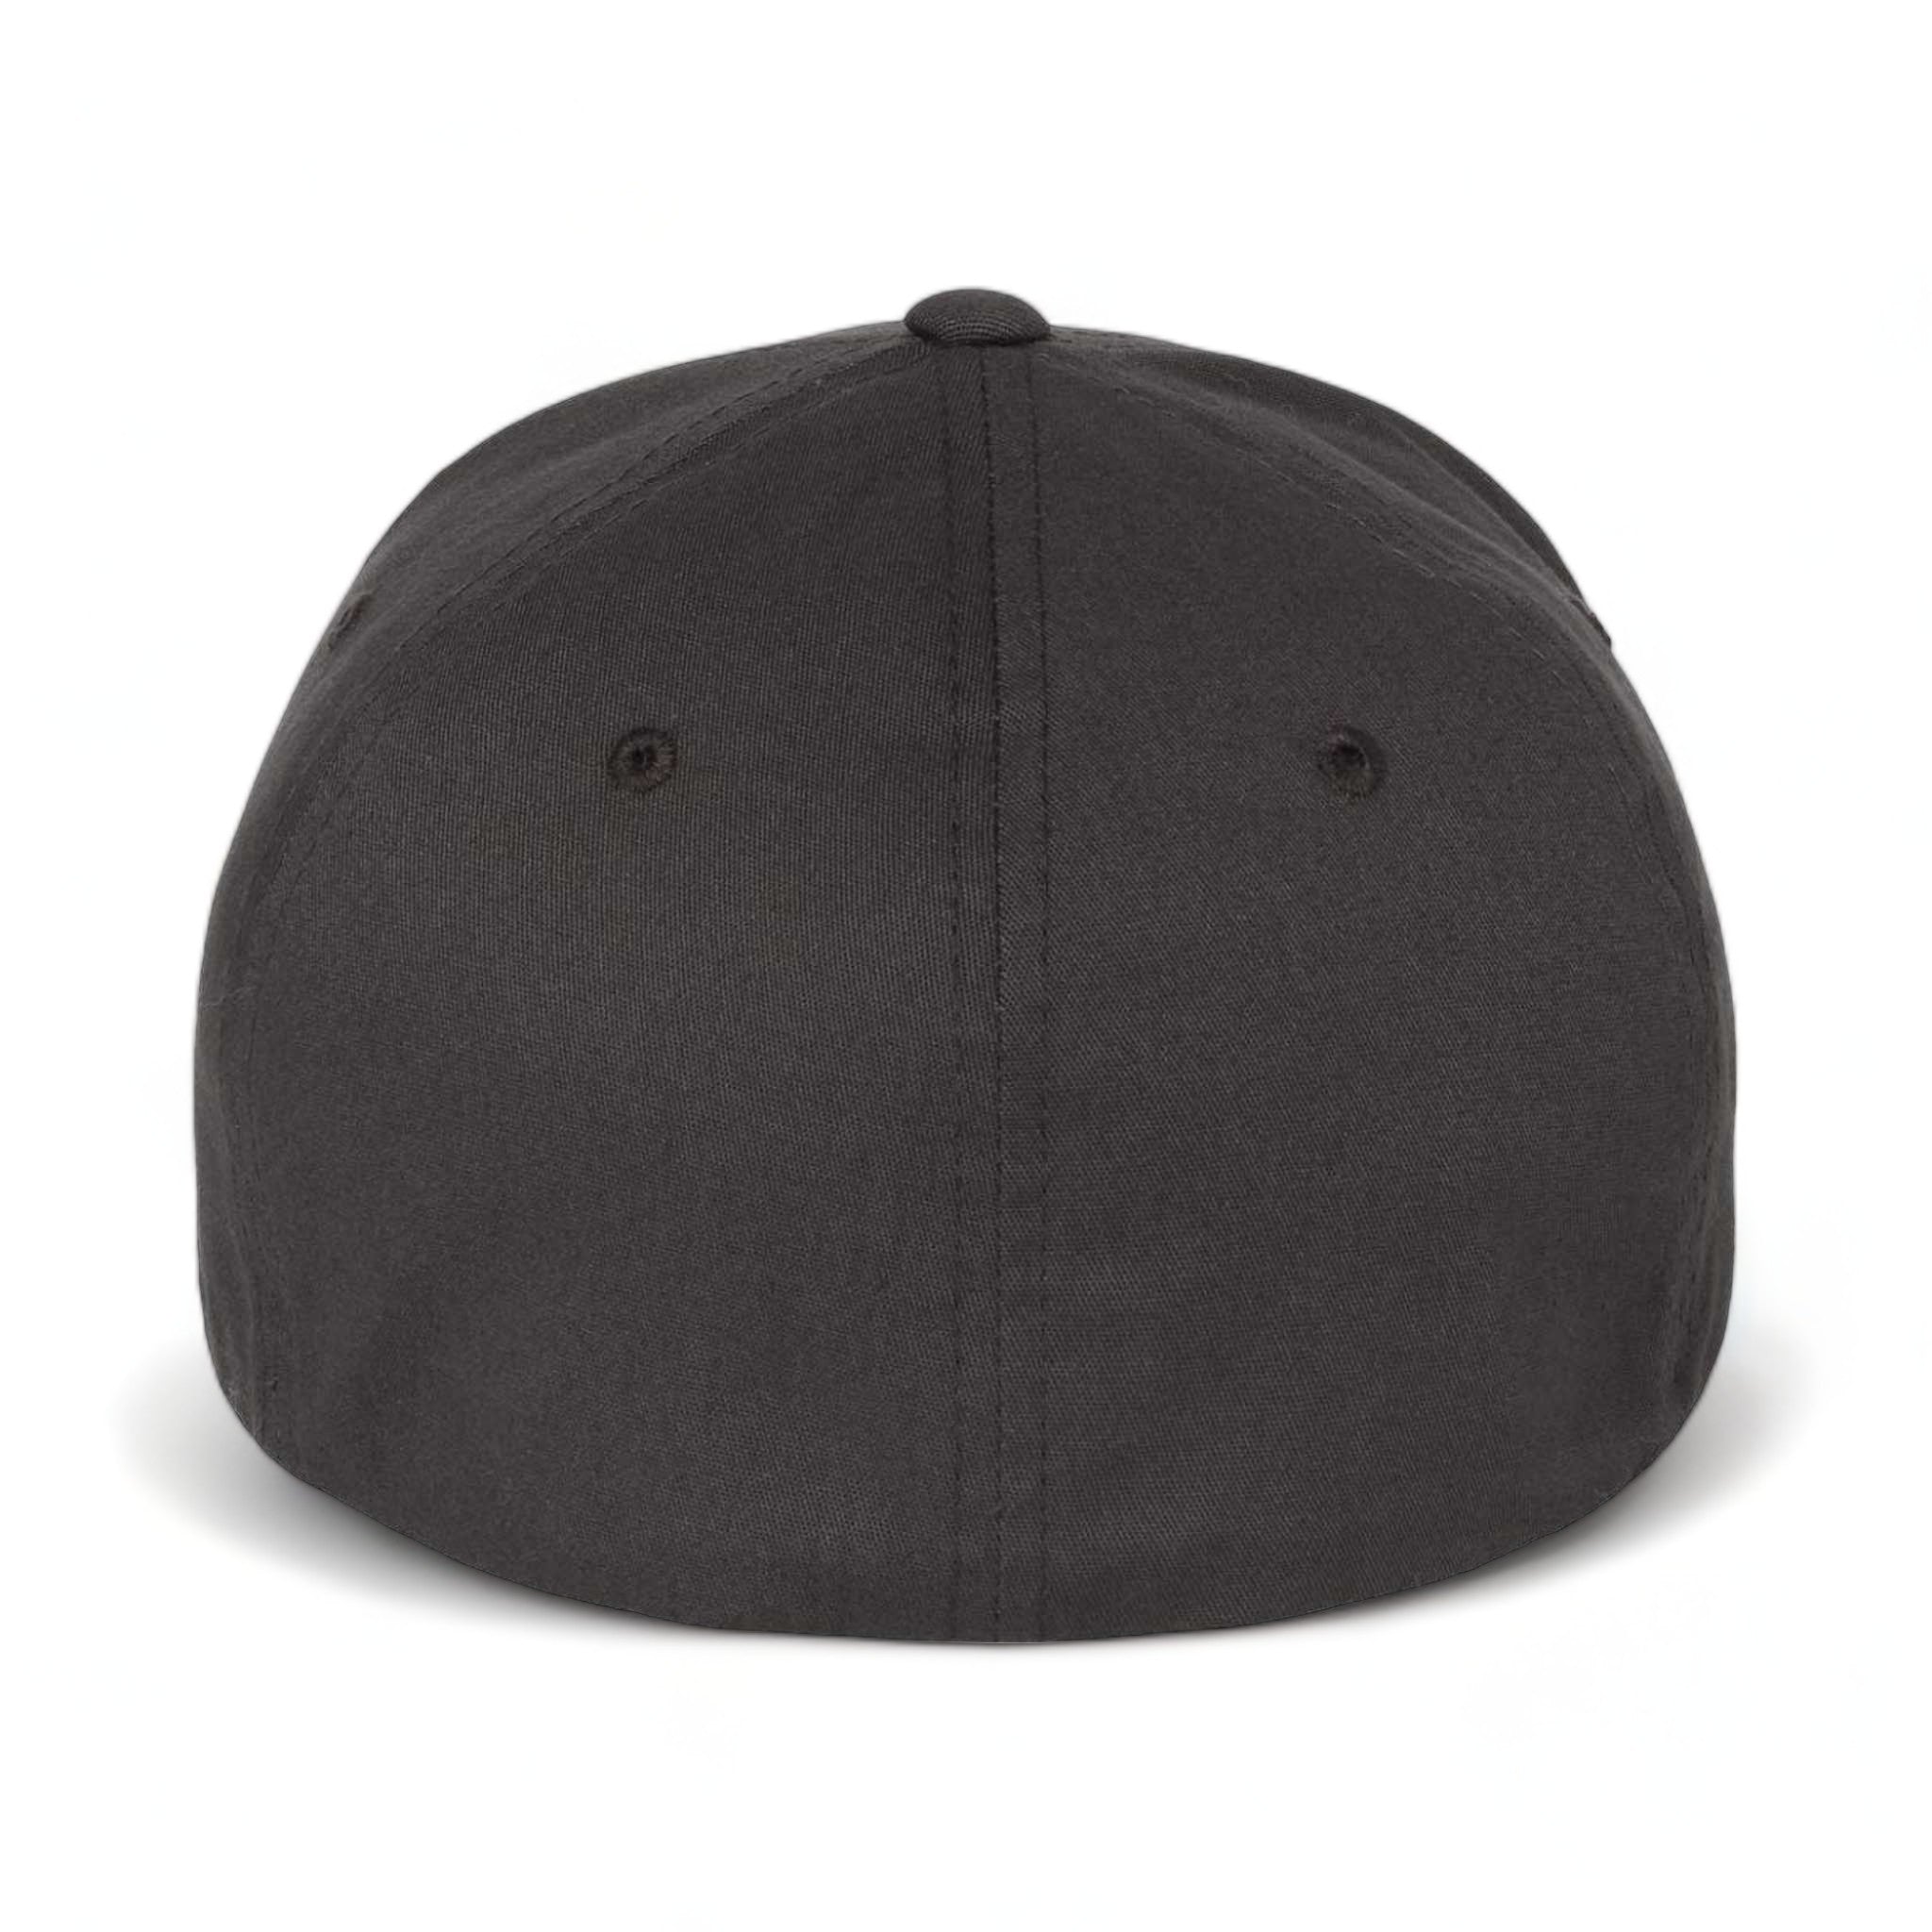 Back view of Flexfit 5001 custom hat in dark grey